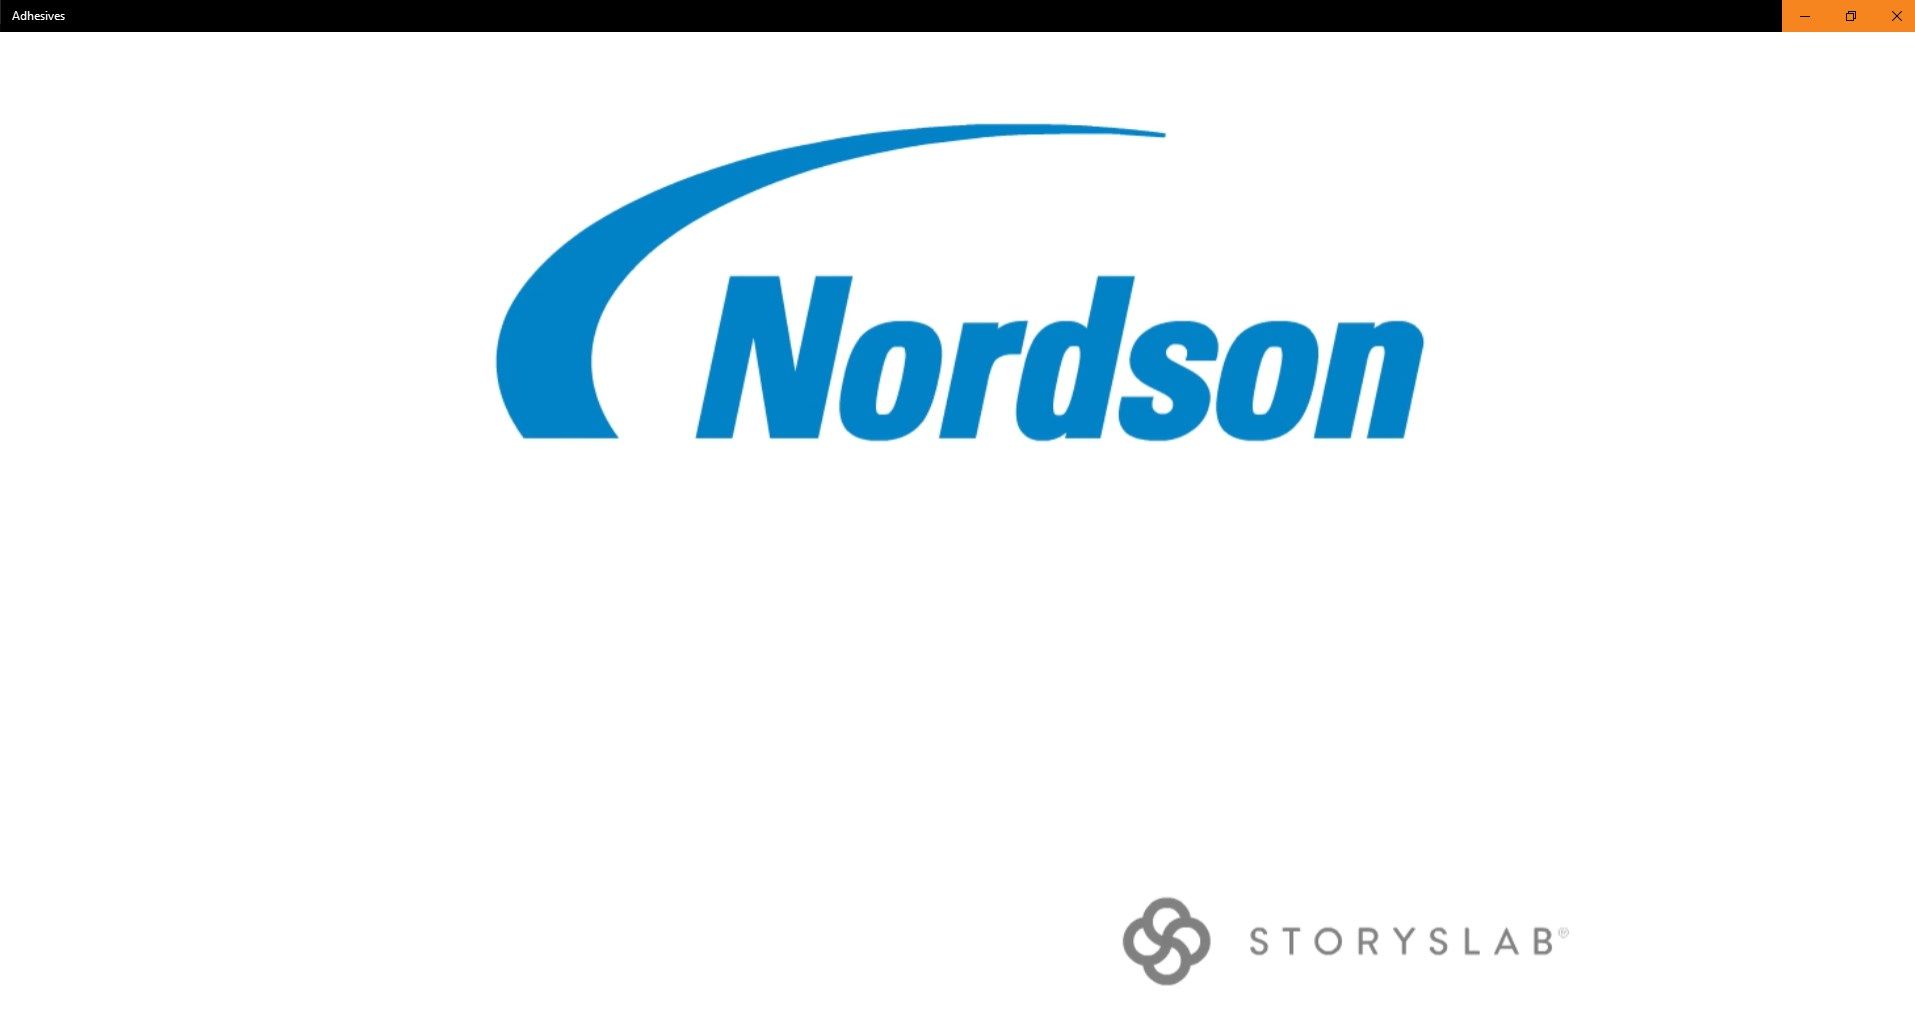 Nordson Adhesives